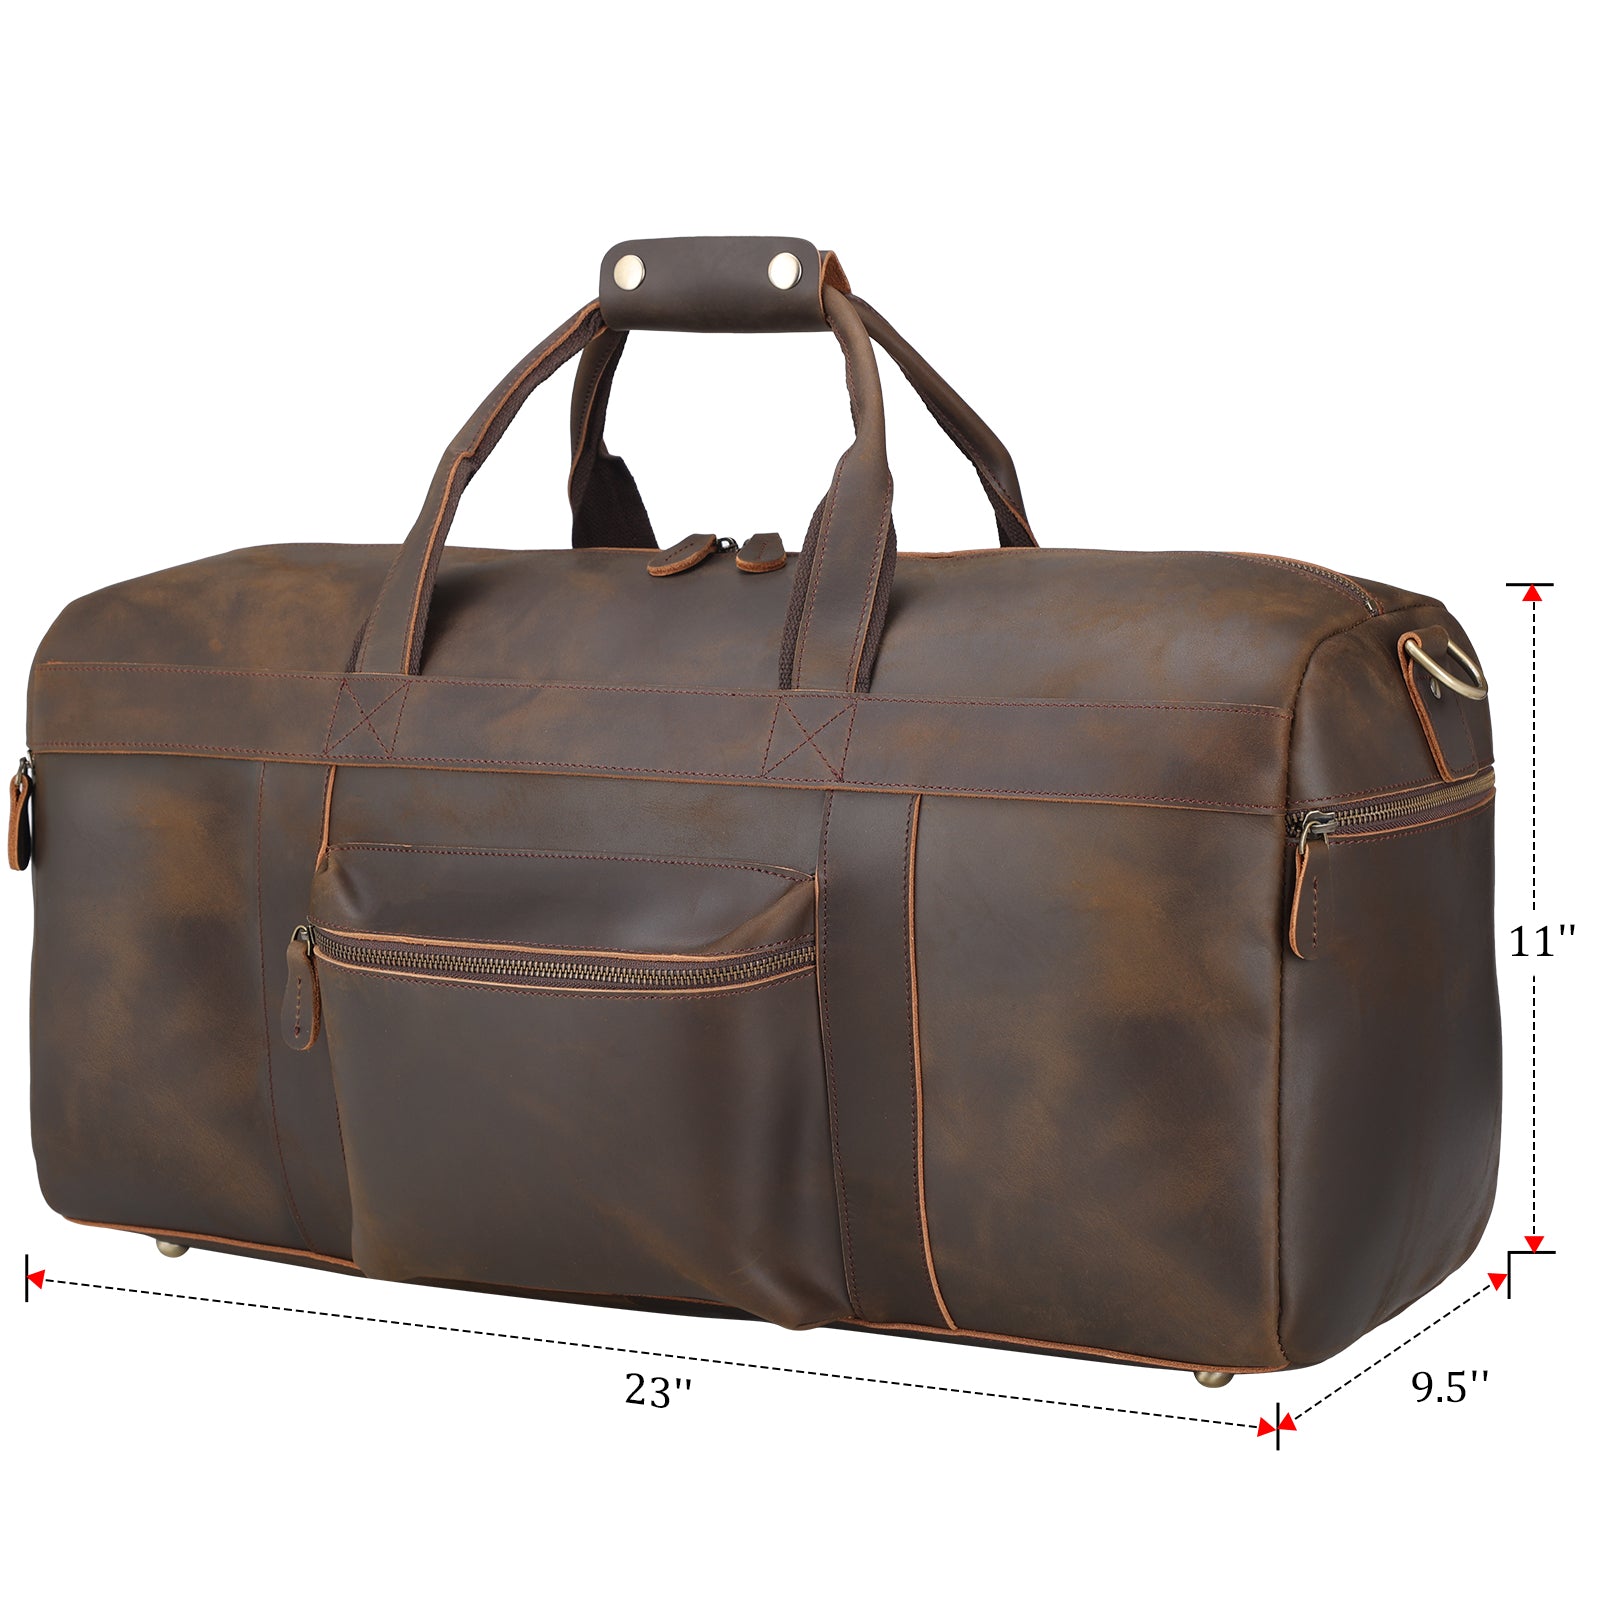 Polare 23'' Full Grain Leather Weekender Duffle Bag (Dimension)